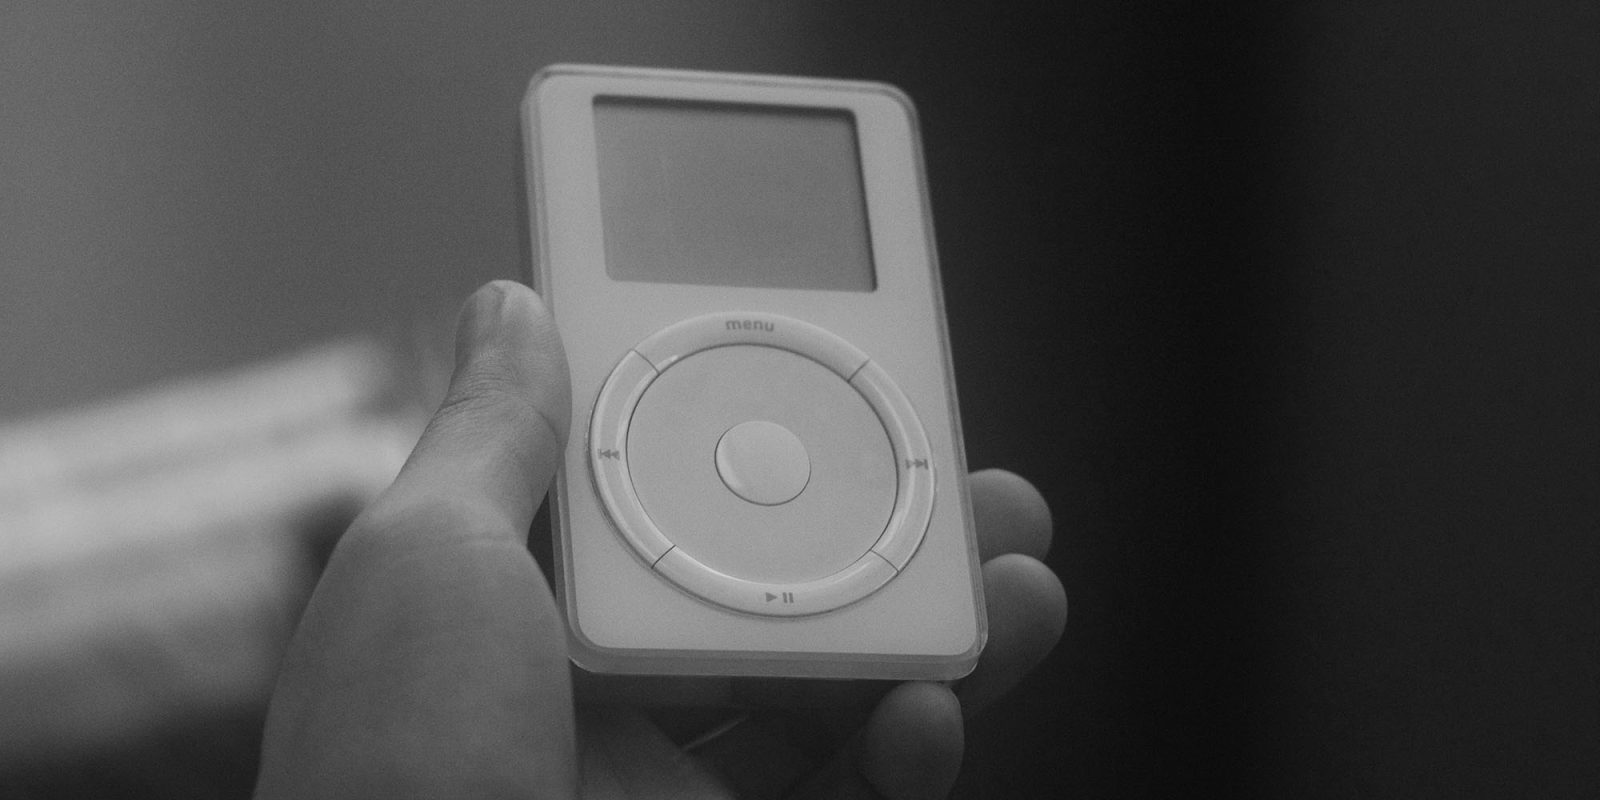 Memories of the iPod